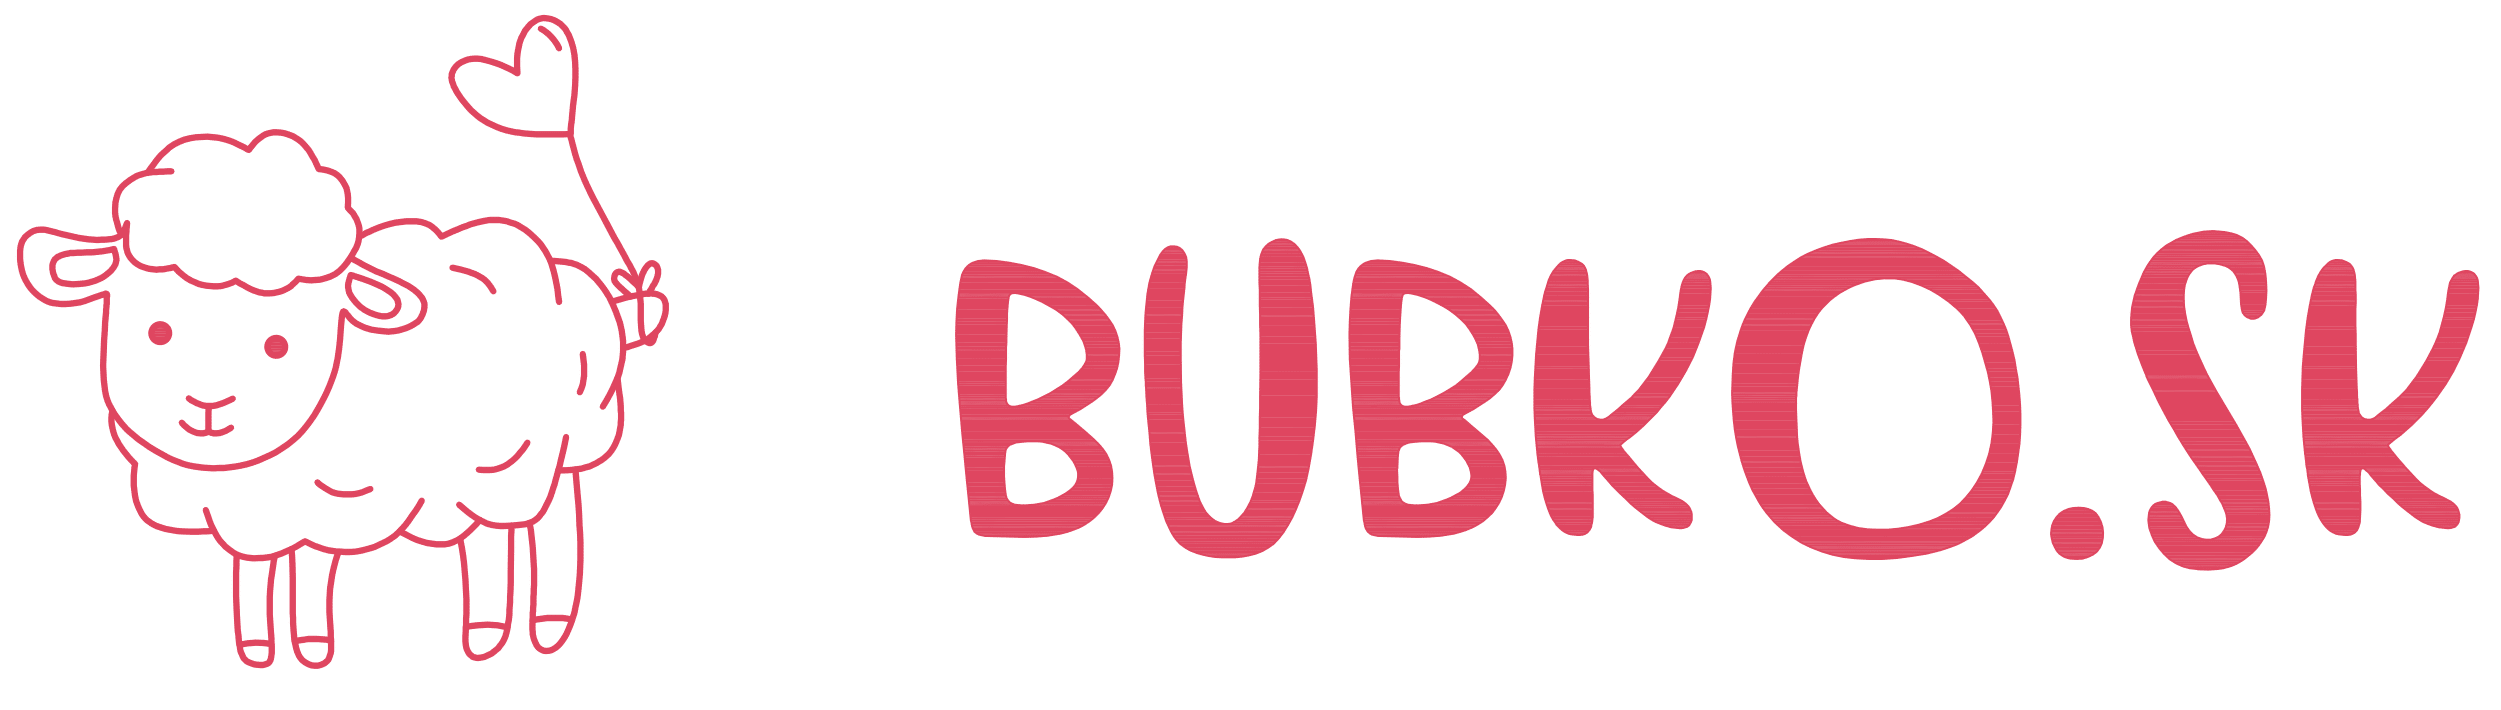 Bubko.sk_logo